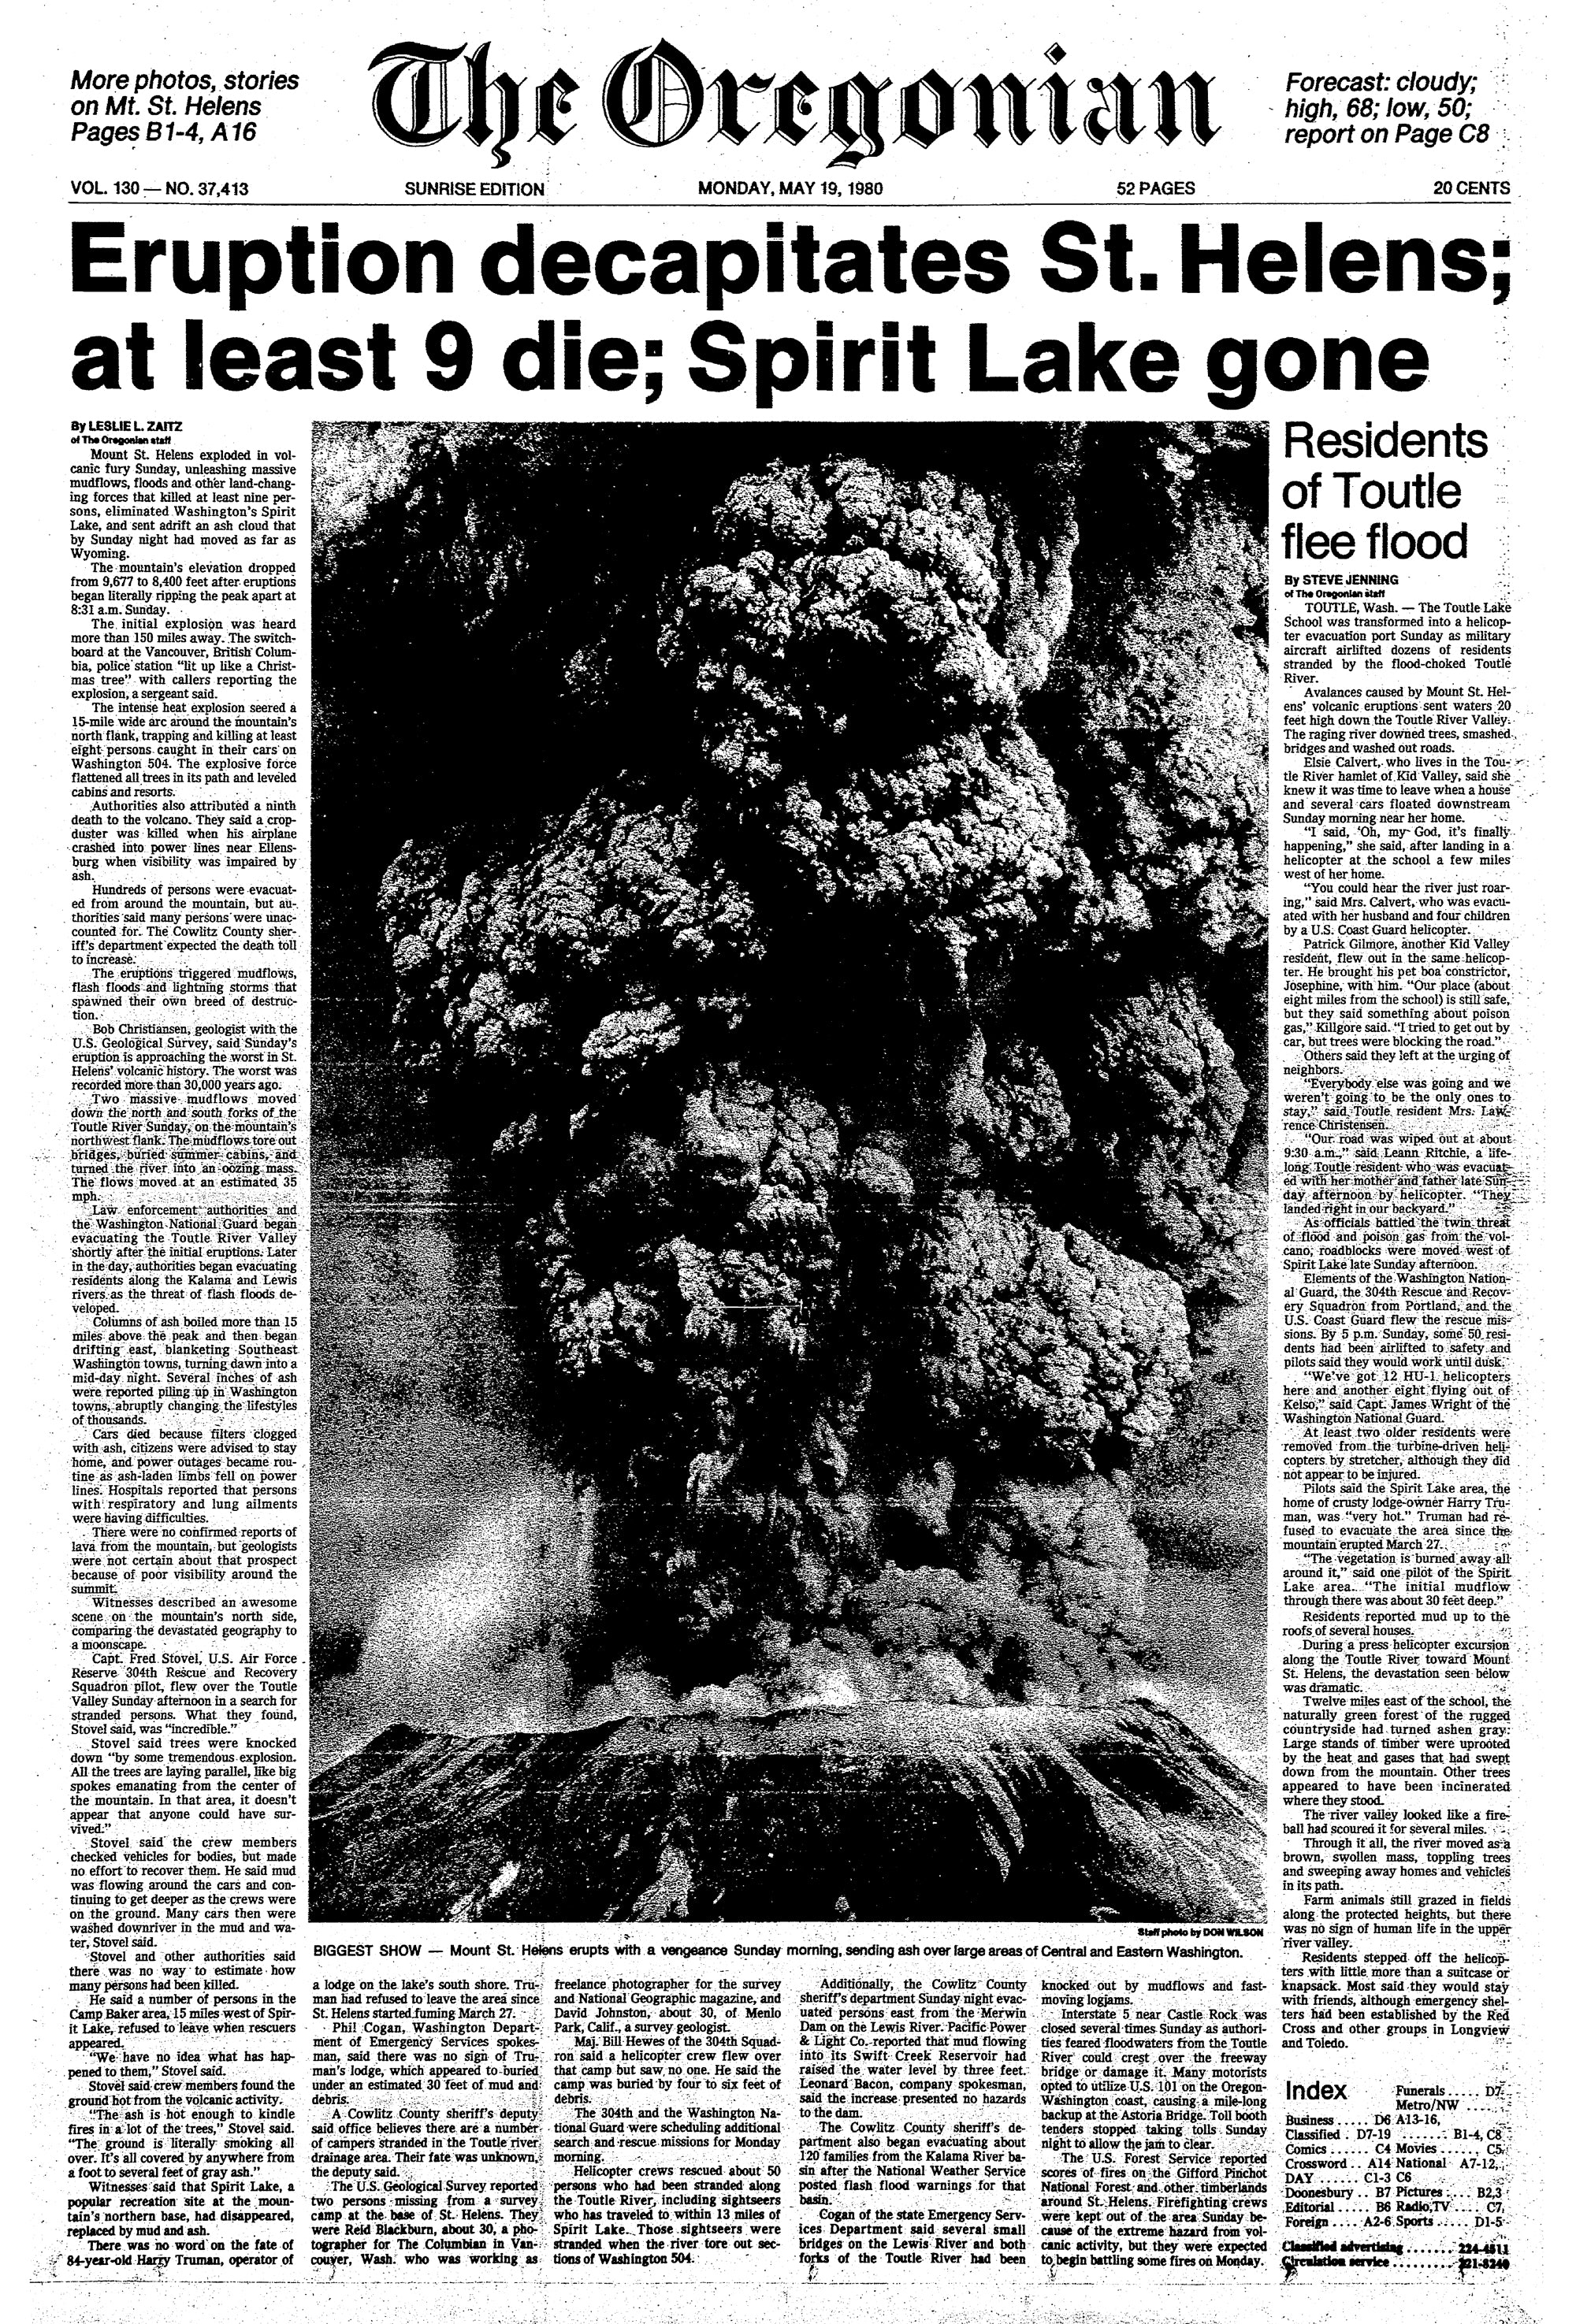 Commemorative Oregonian Front Page - Eruption Decapitates St. Helen's